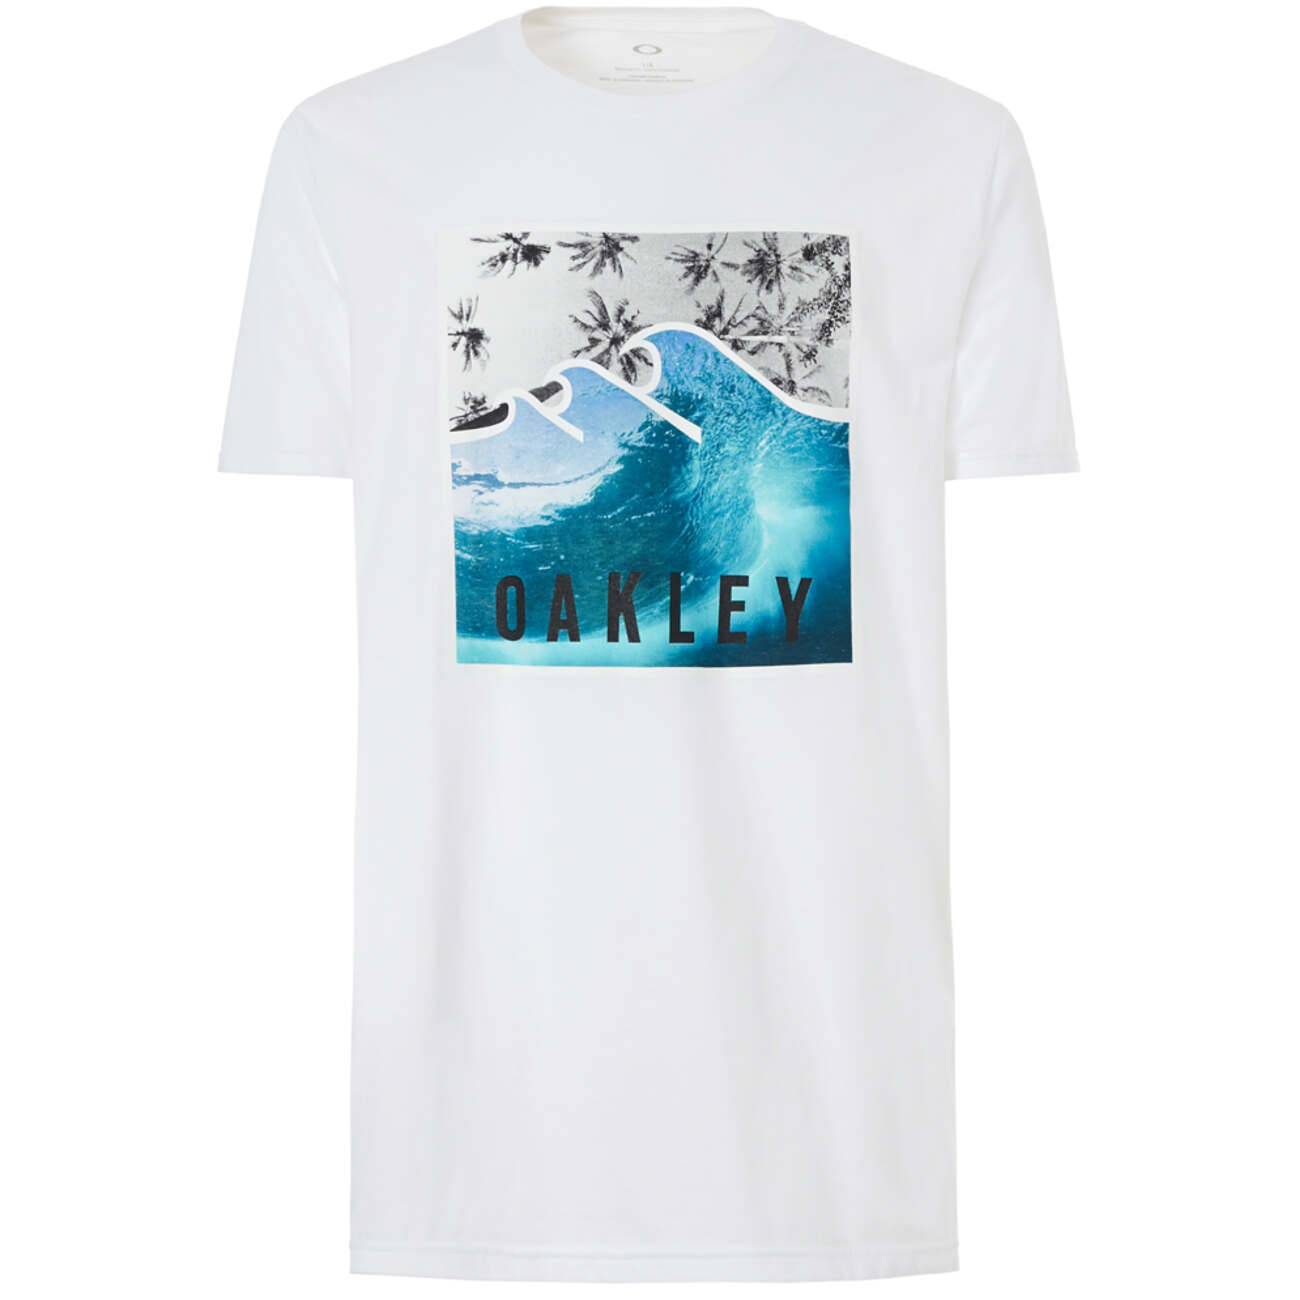 Oakley T-Shirt Palm Waves White